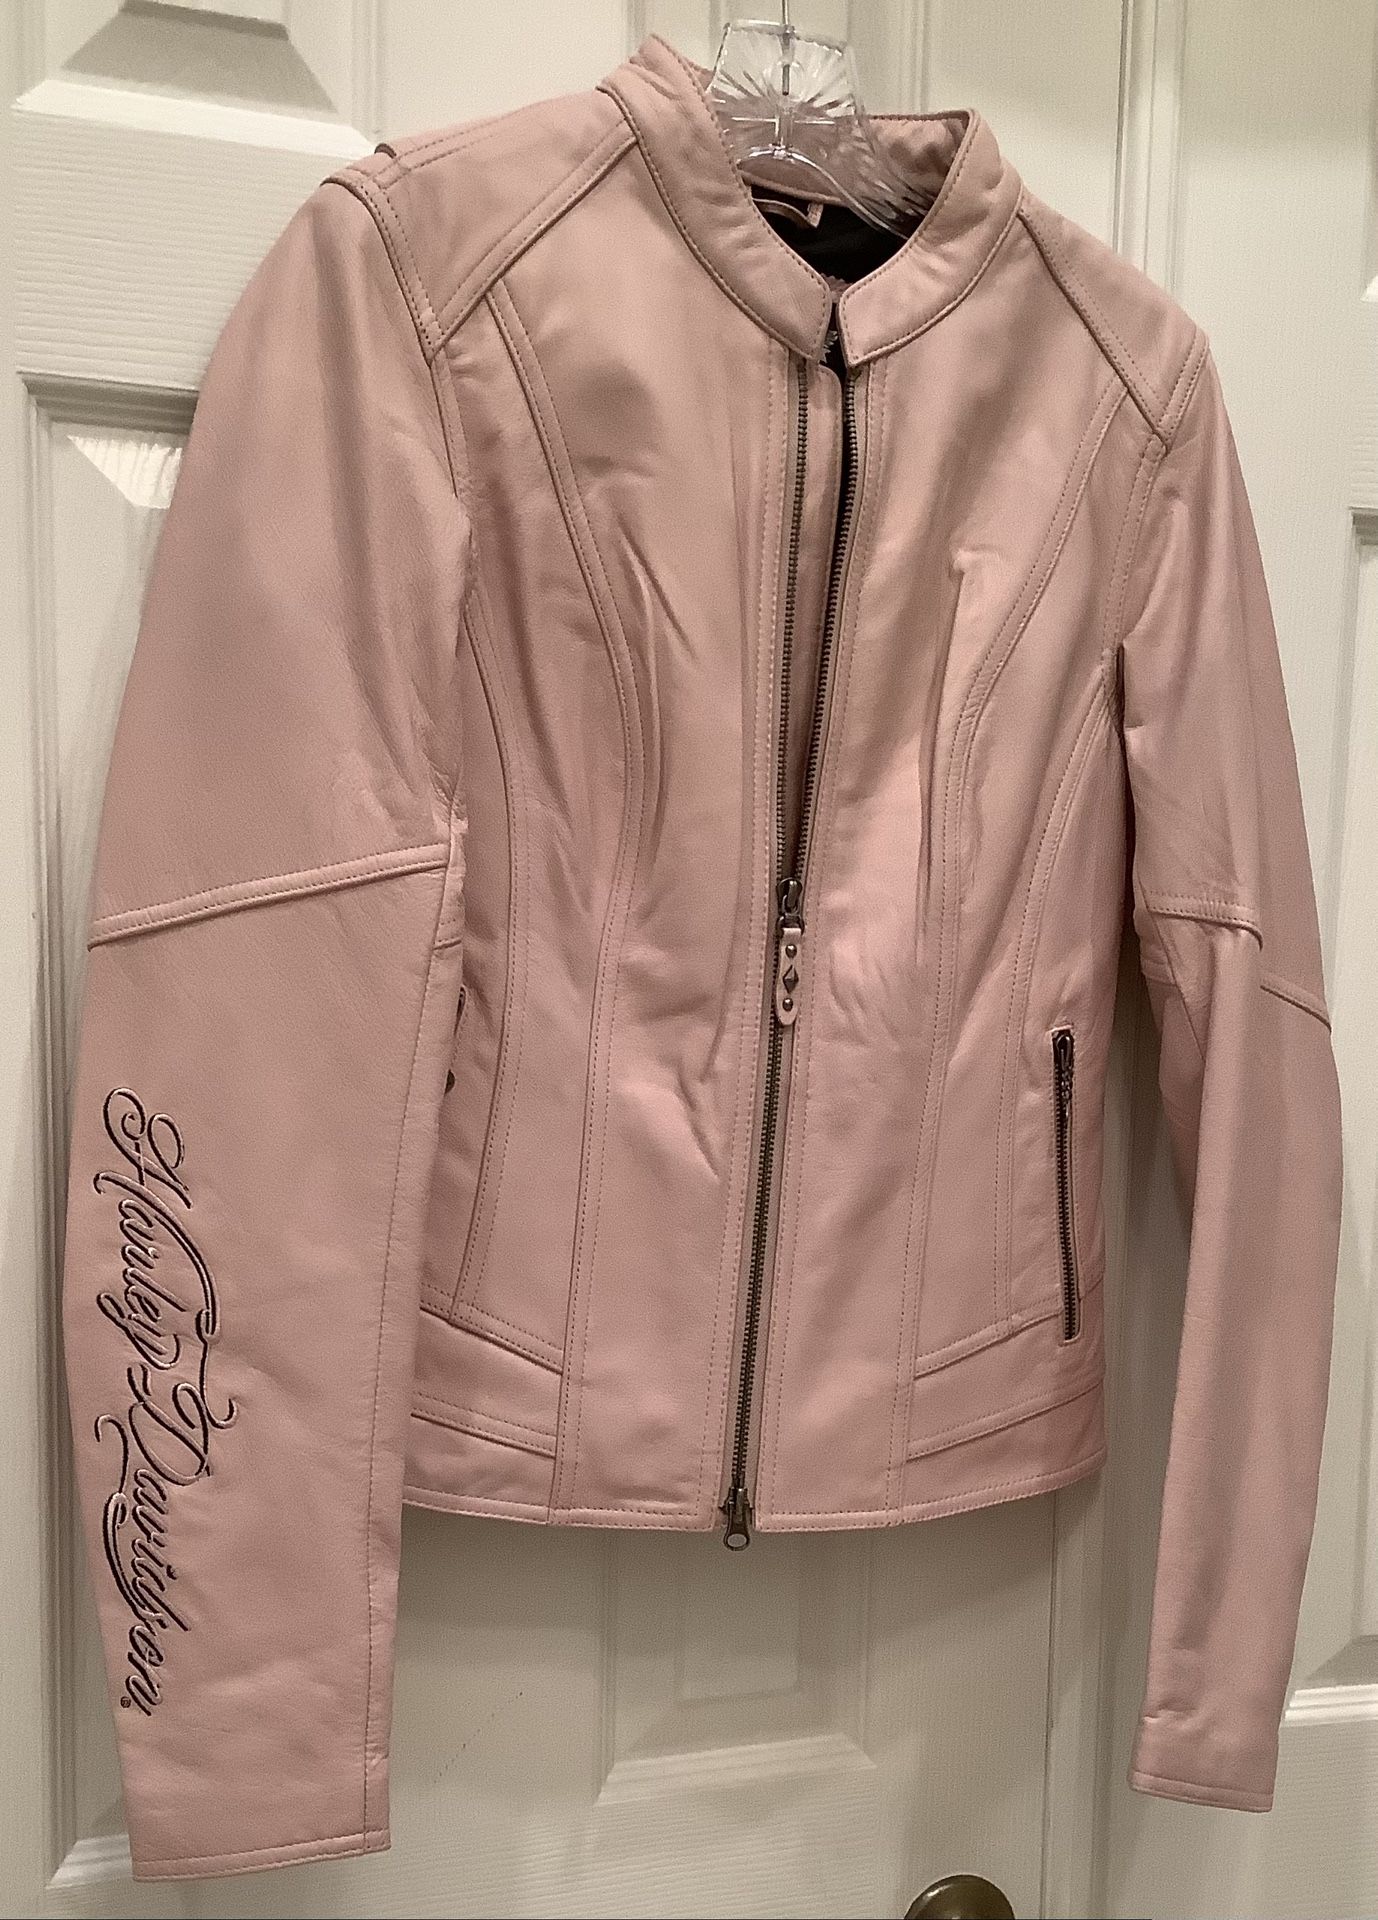 Motorcycle Harley Davidson Pink Leather Jacket Signed On Sleeve Laces On Back, Hardly Used Very Rare  Size Small 